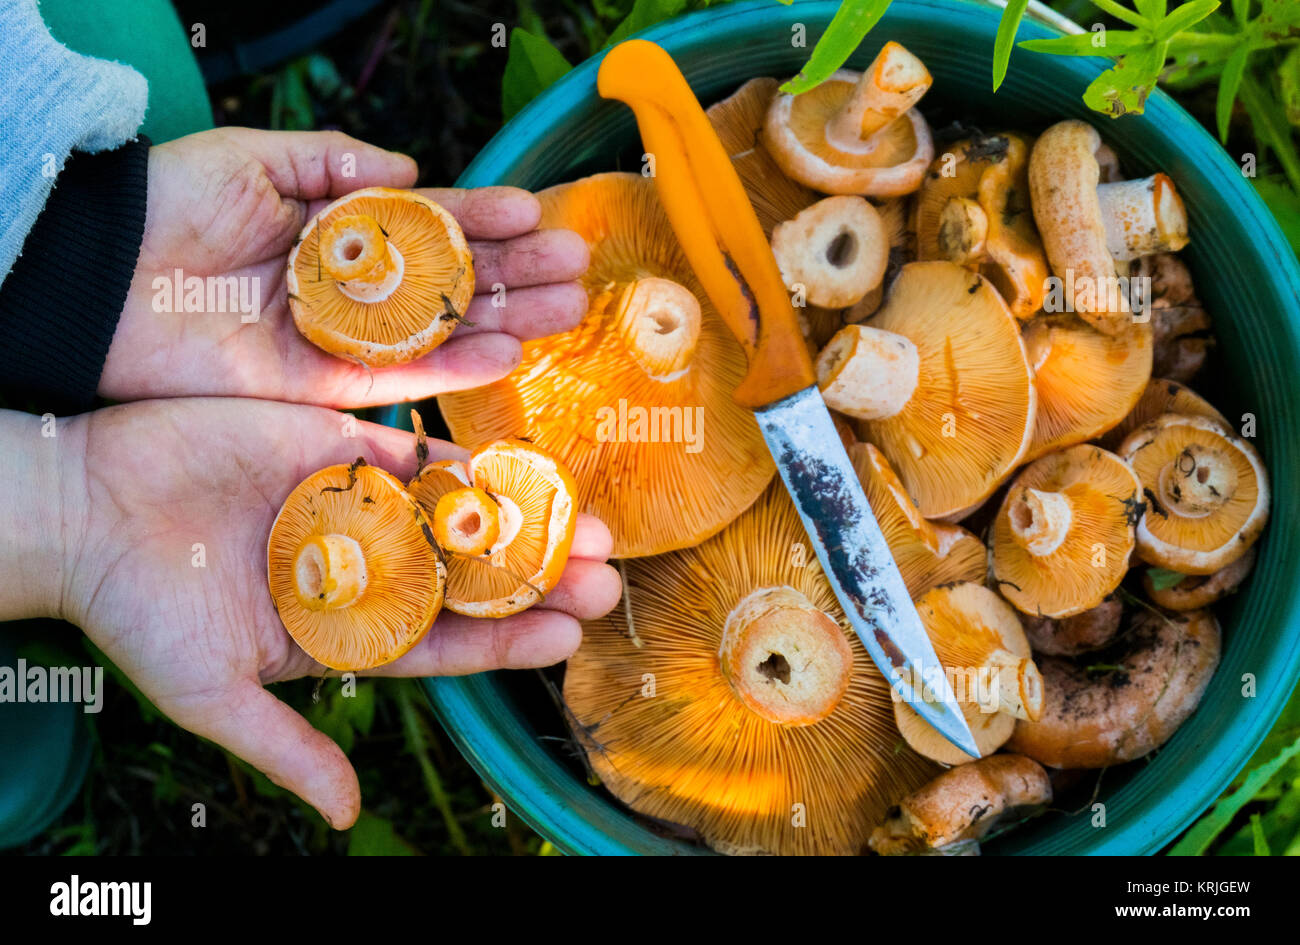 Hands showing buckets of mushrooms Stock Photo